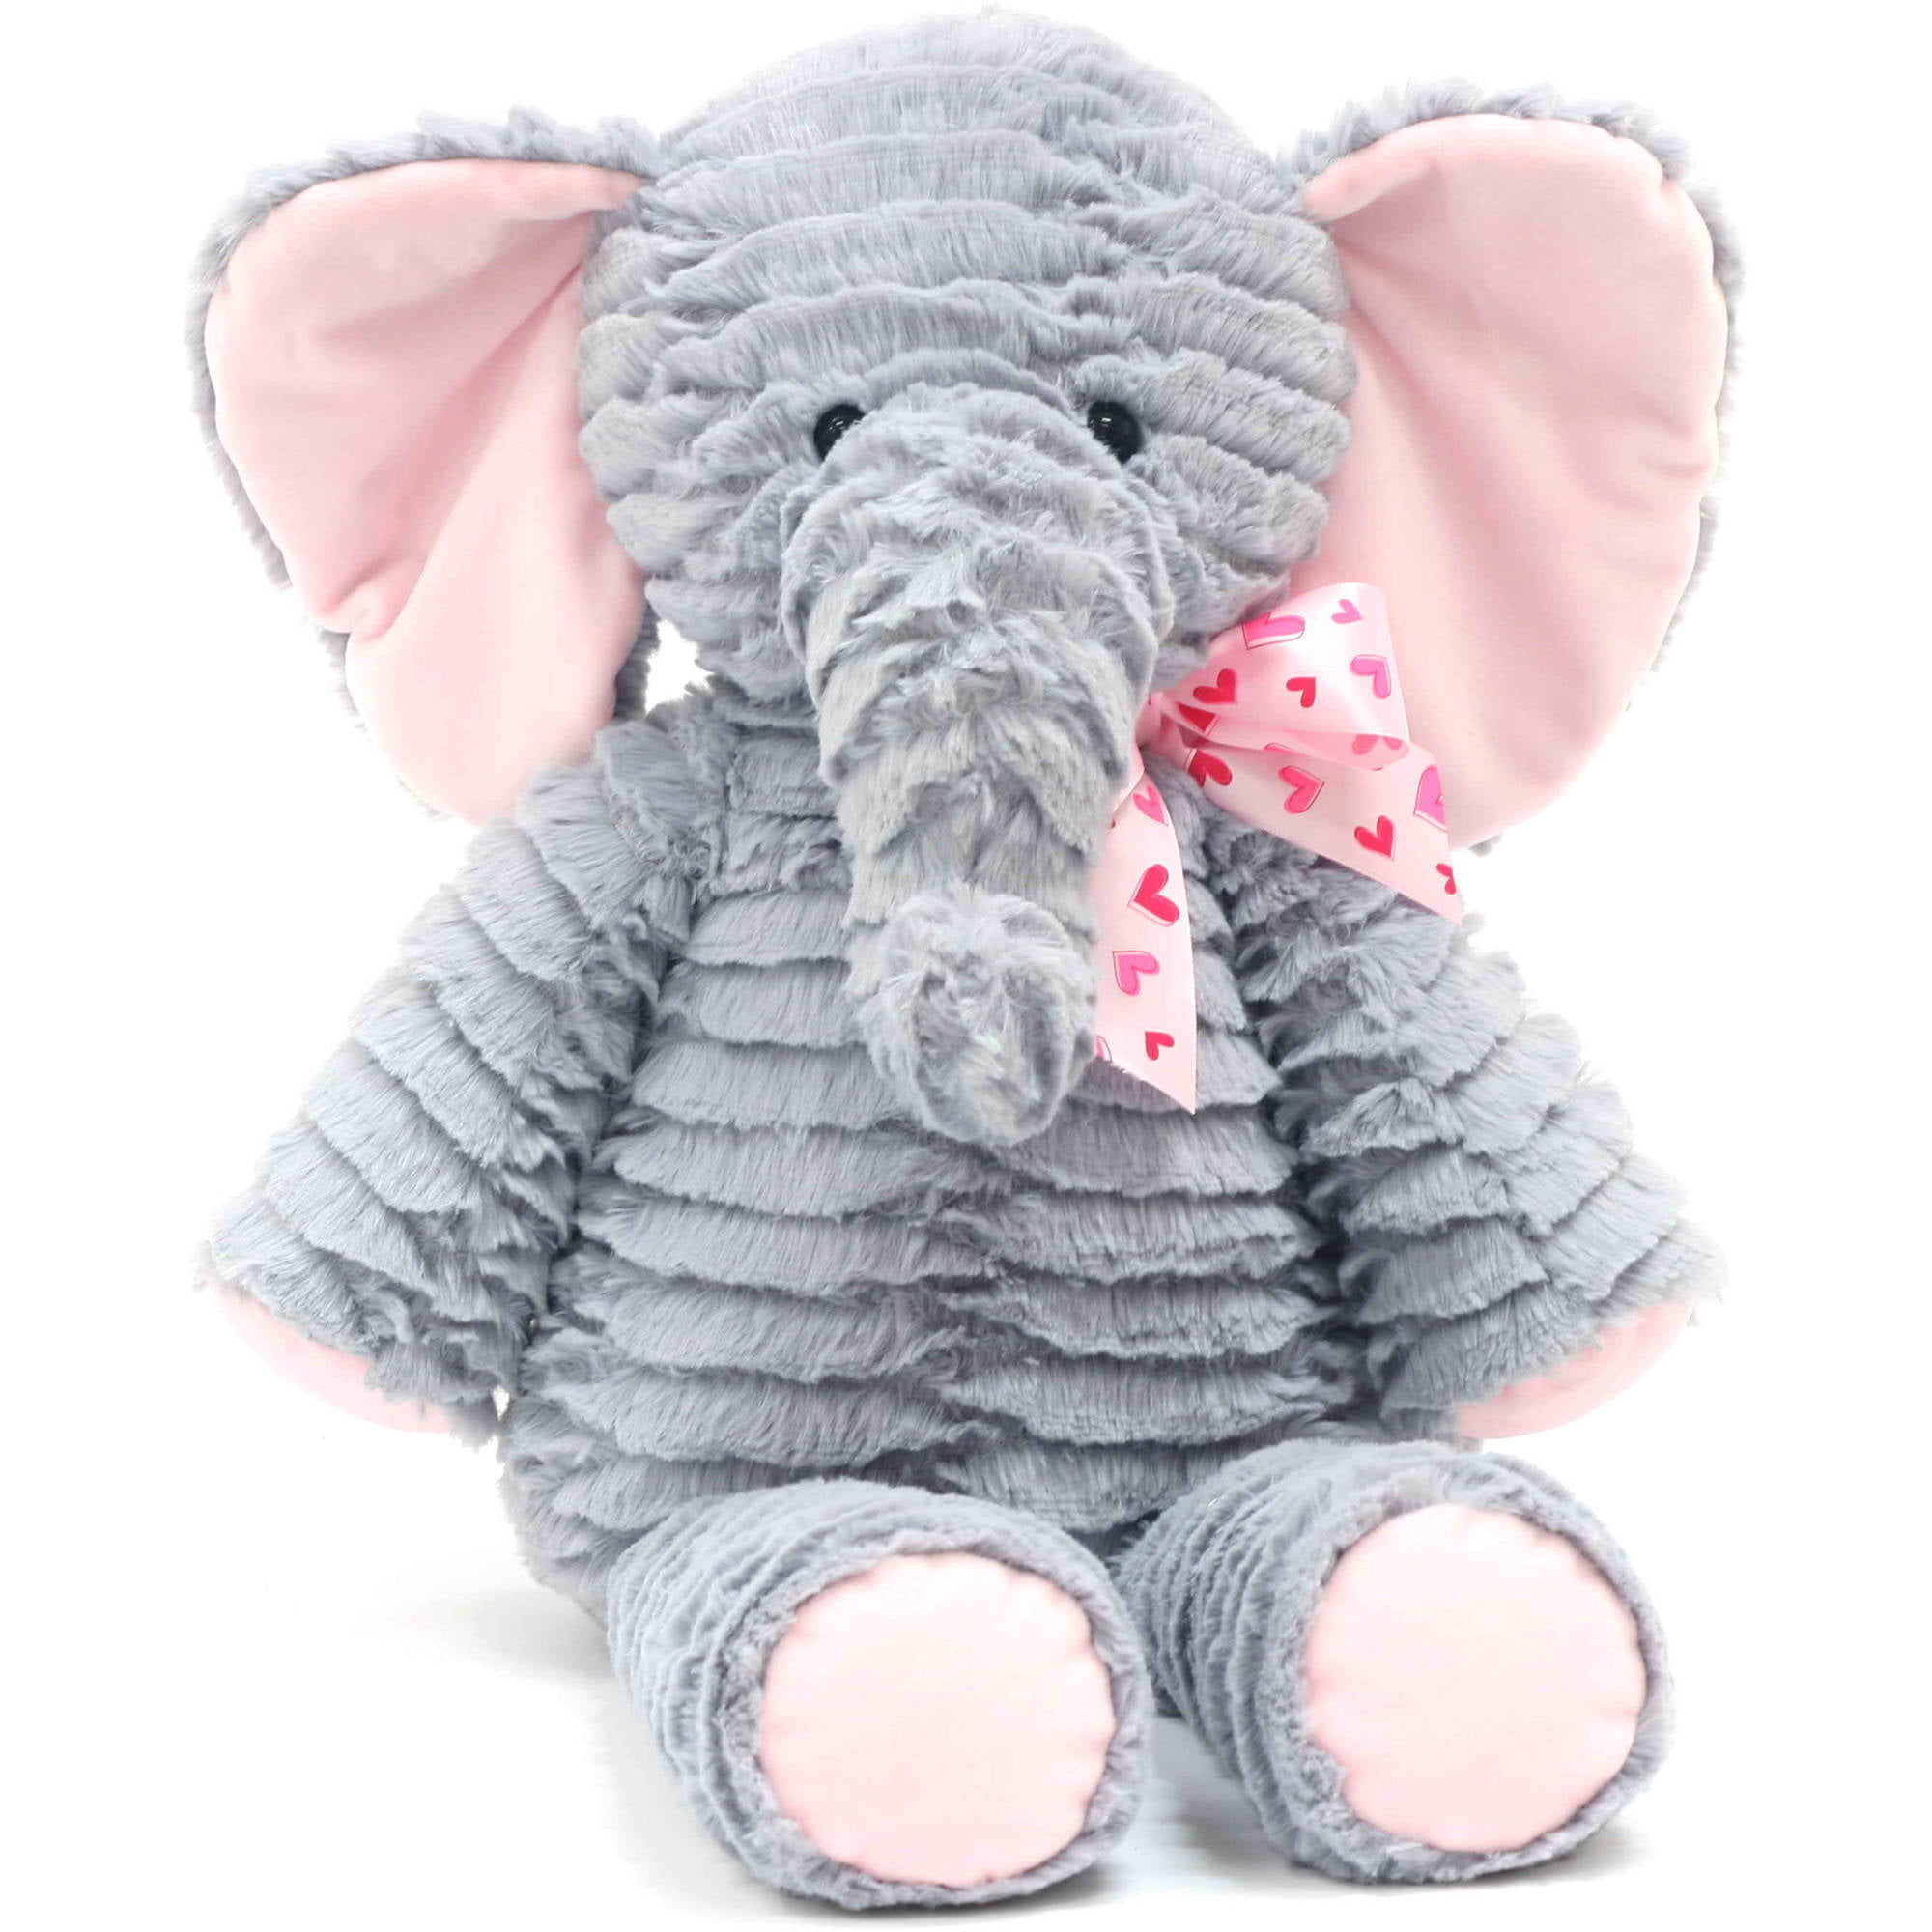 Stuffed Soft and Cuddly Elephant 